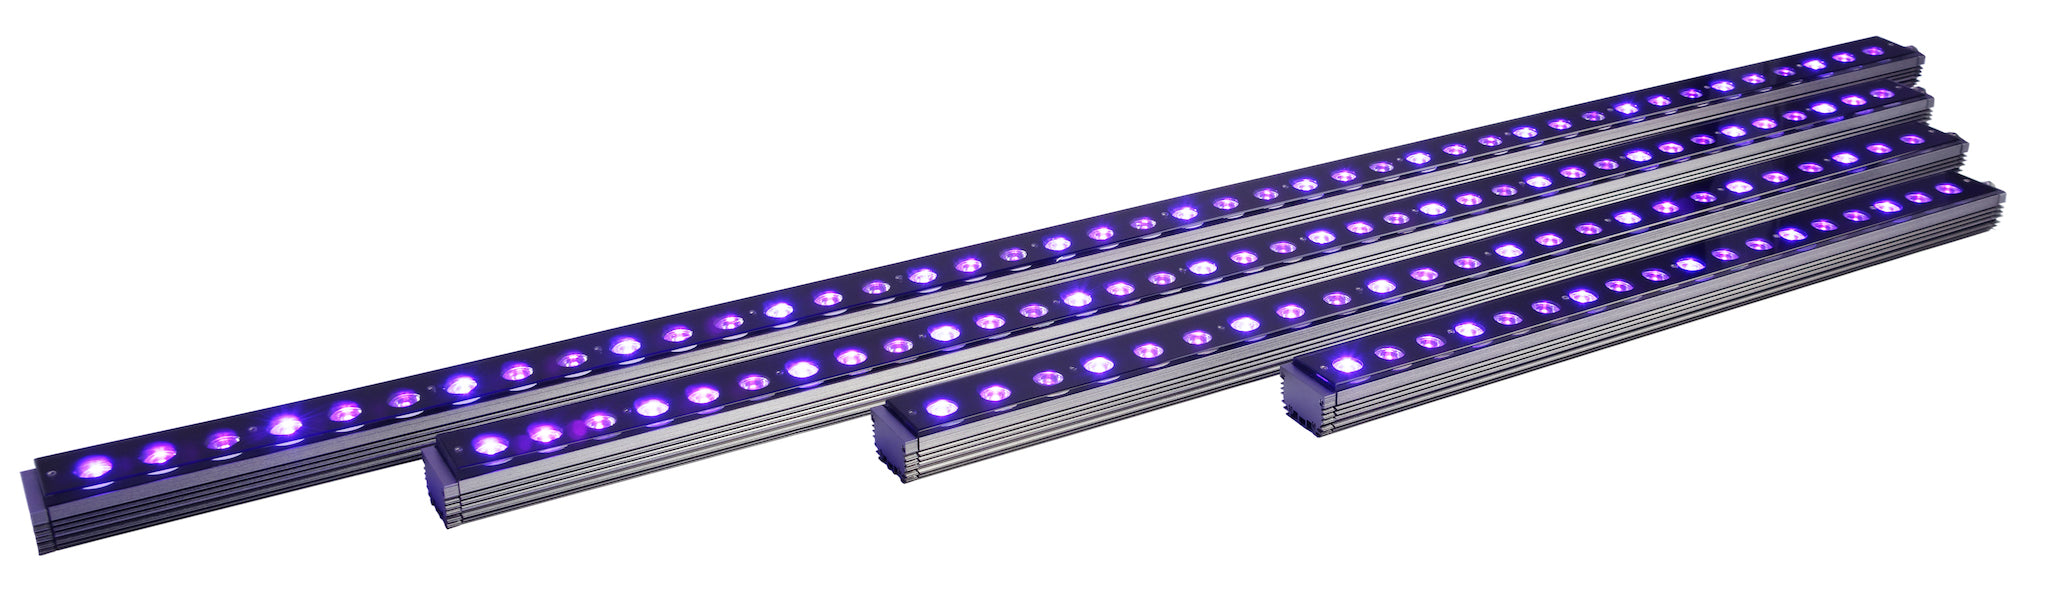 OR3 UV/Violet - Reef Aquarium LED Bar